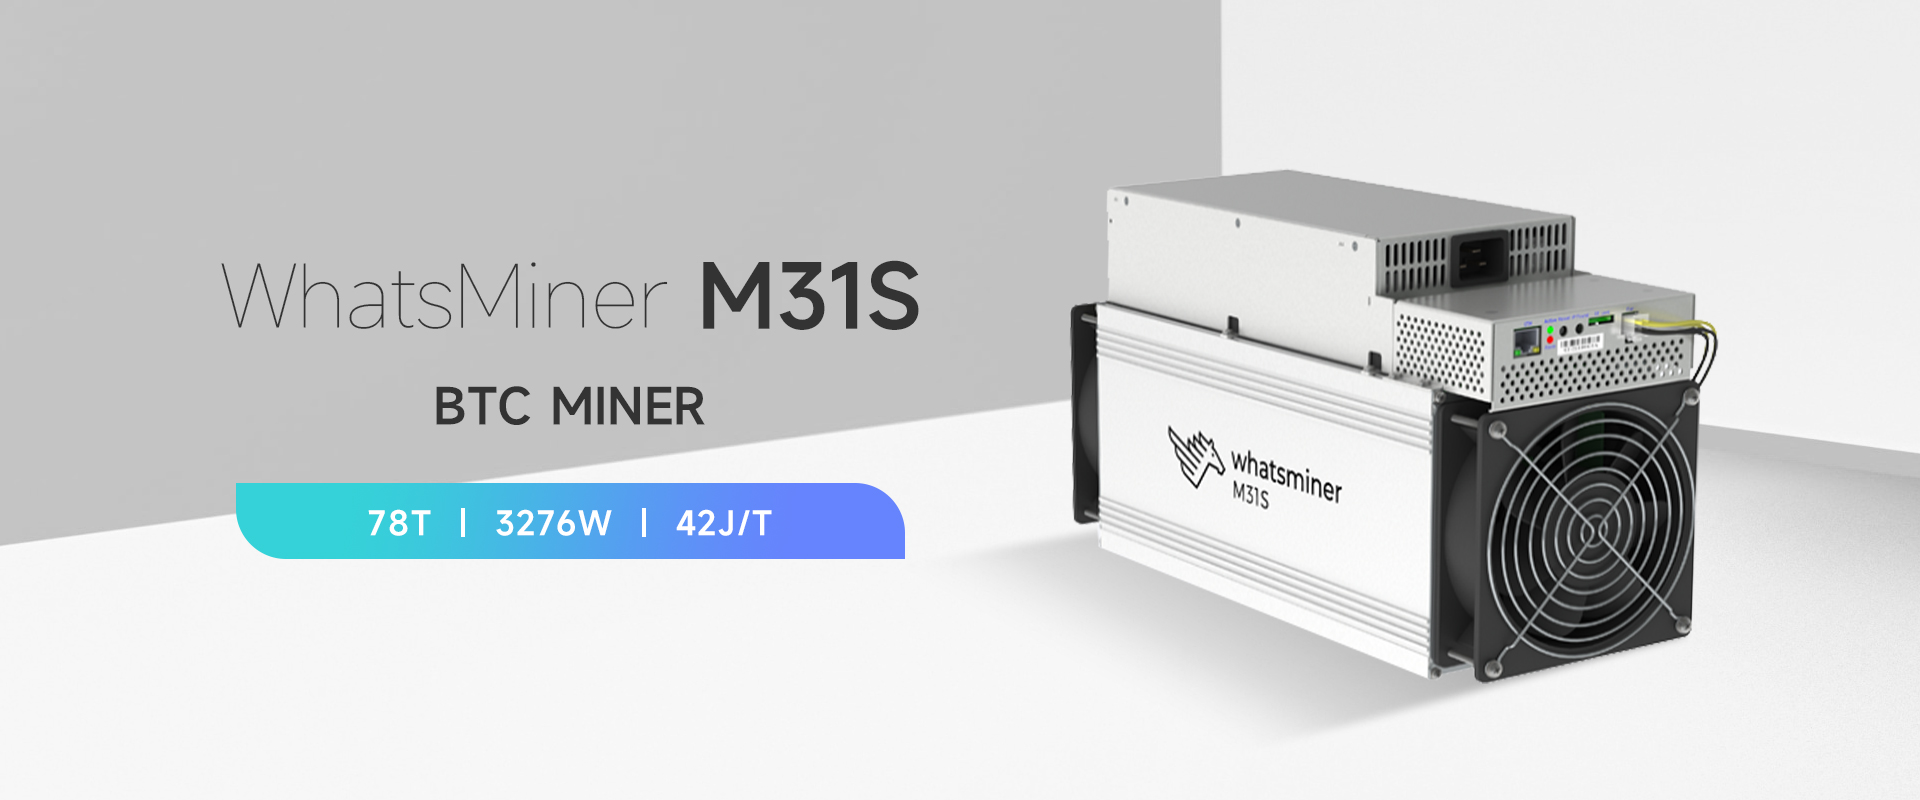 MicroBT Whatsminer M31S